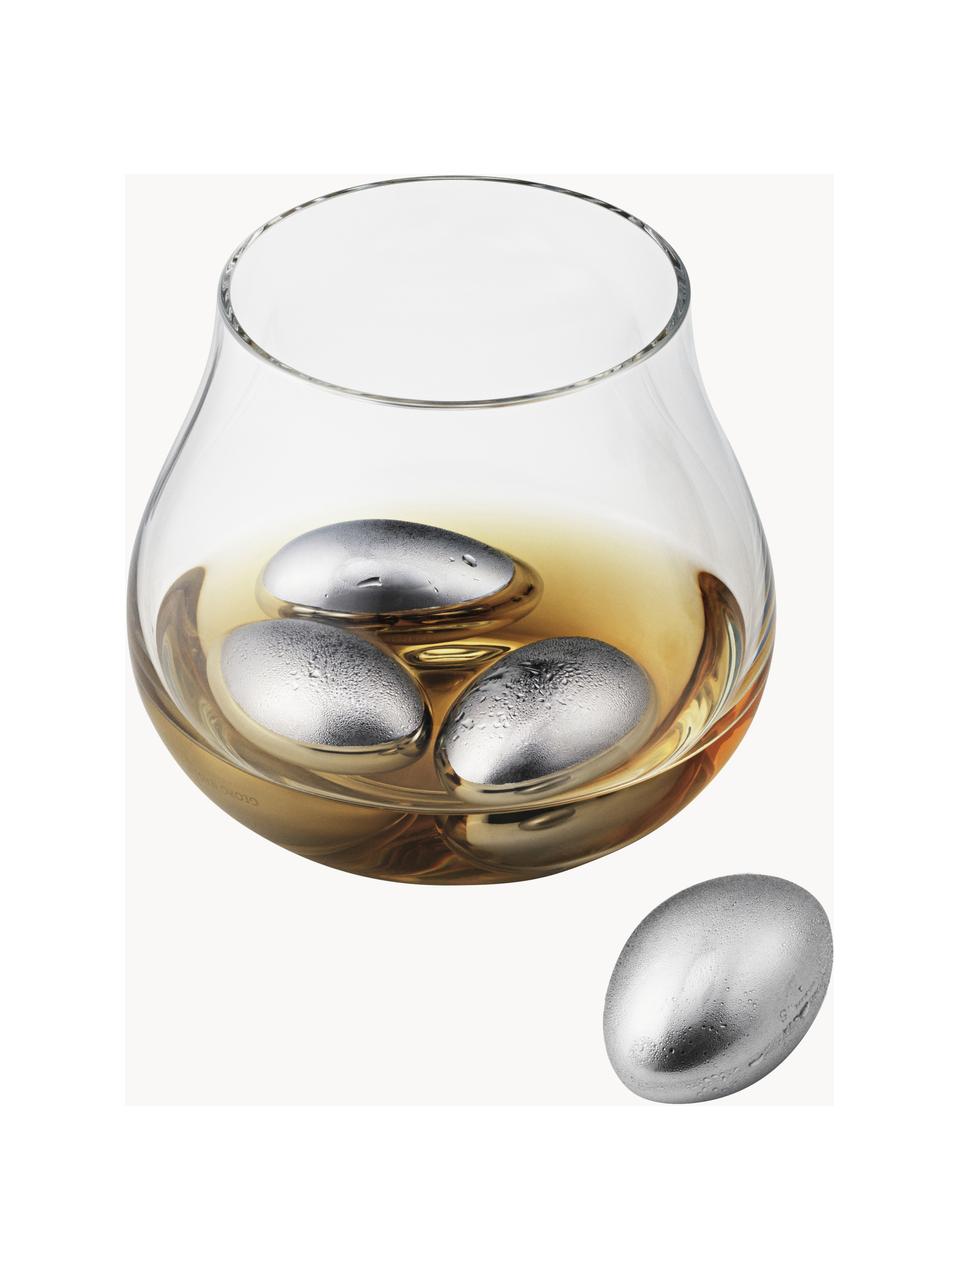 Whisky-Steine Sky aus Edelstahl, 4 Stück, Edelstahl, poliert, Silberfarben, hochglanzpoliert, B 2 x H 4 cm